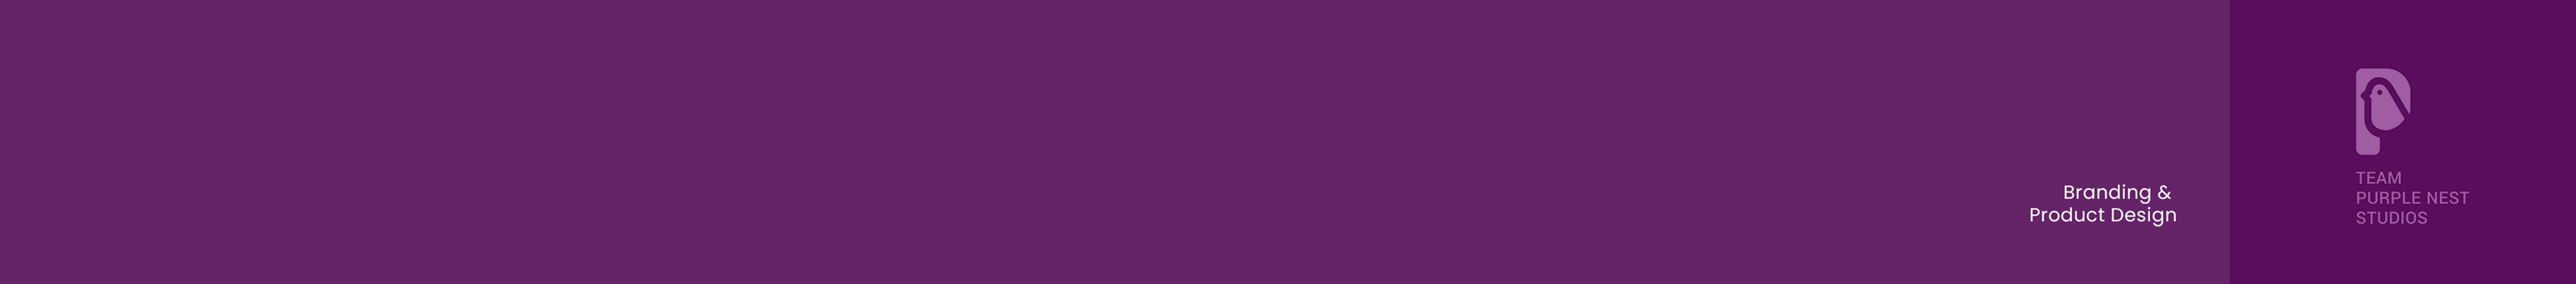 Team Purple Nest Studios's profile banner